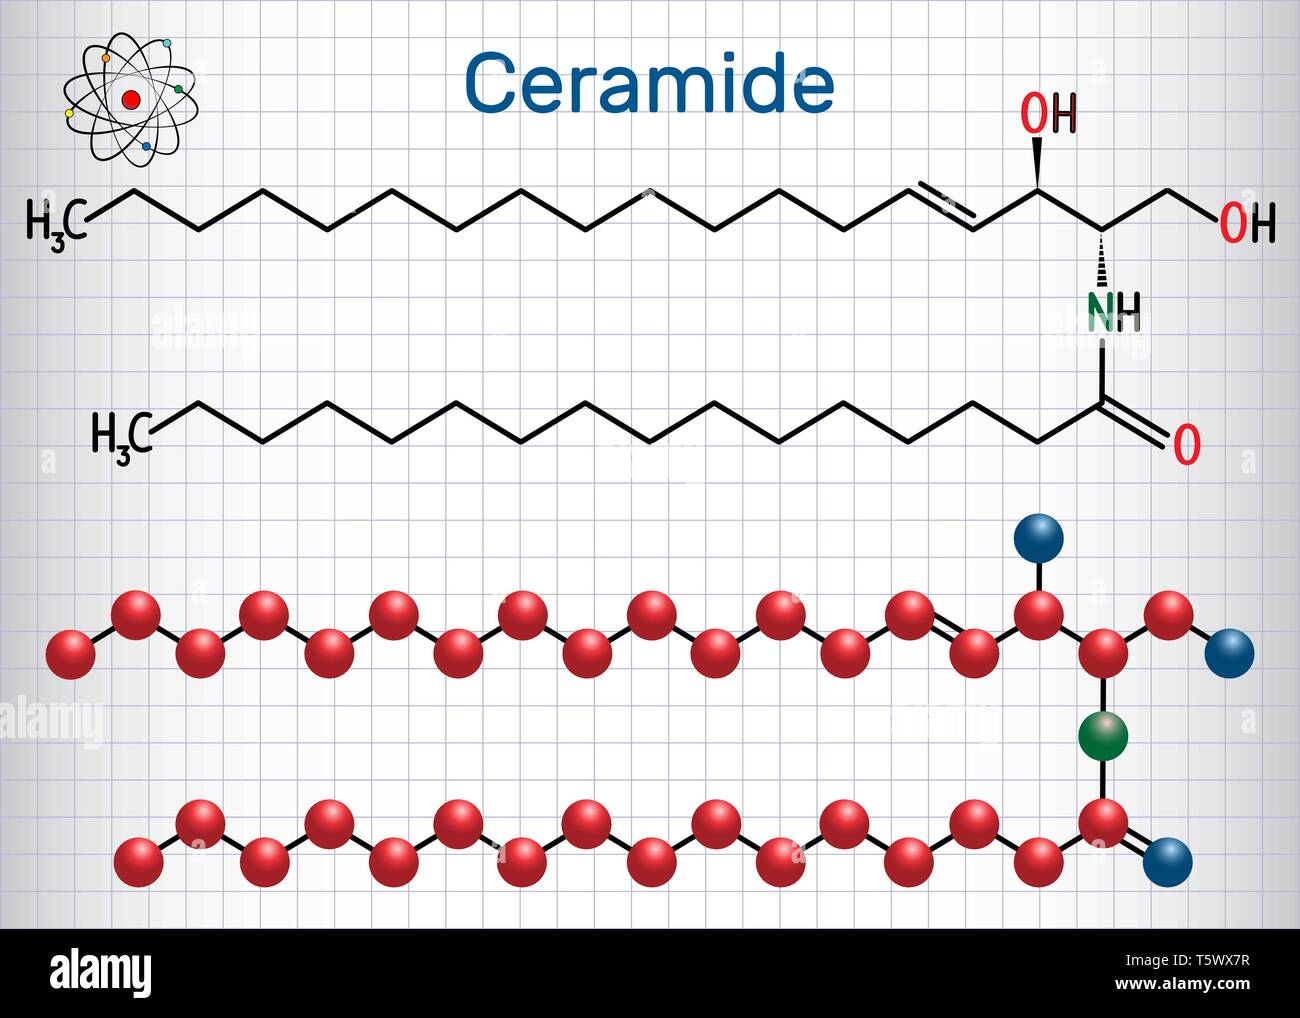 Ceramide Cell Membrane Lipid Molecule Stock Vector Images Alamy